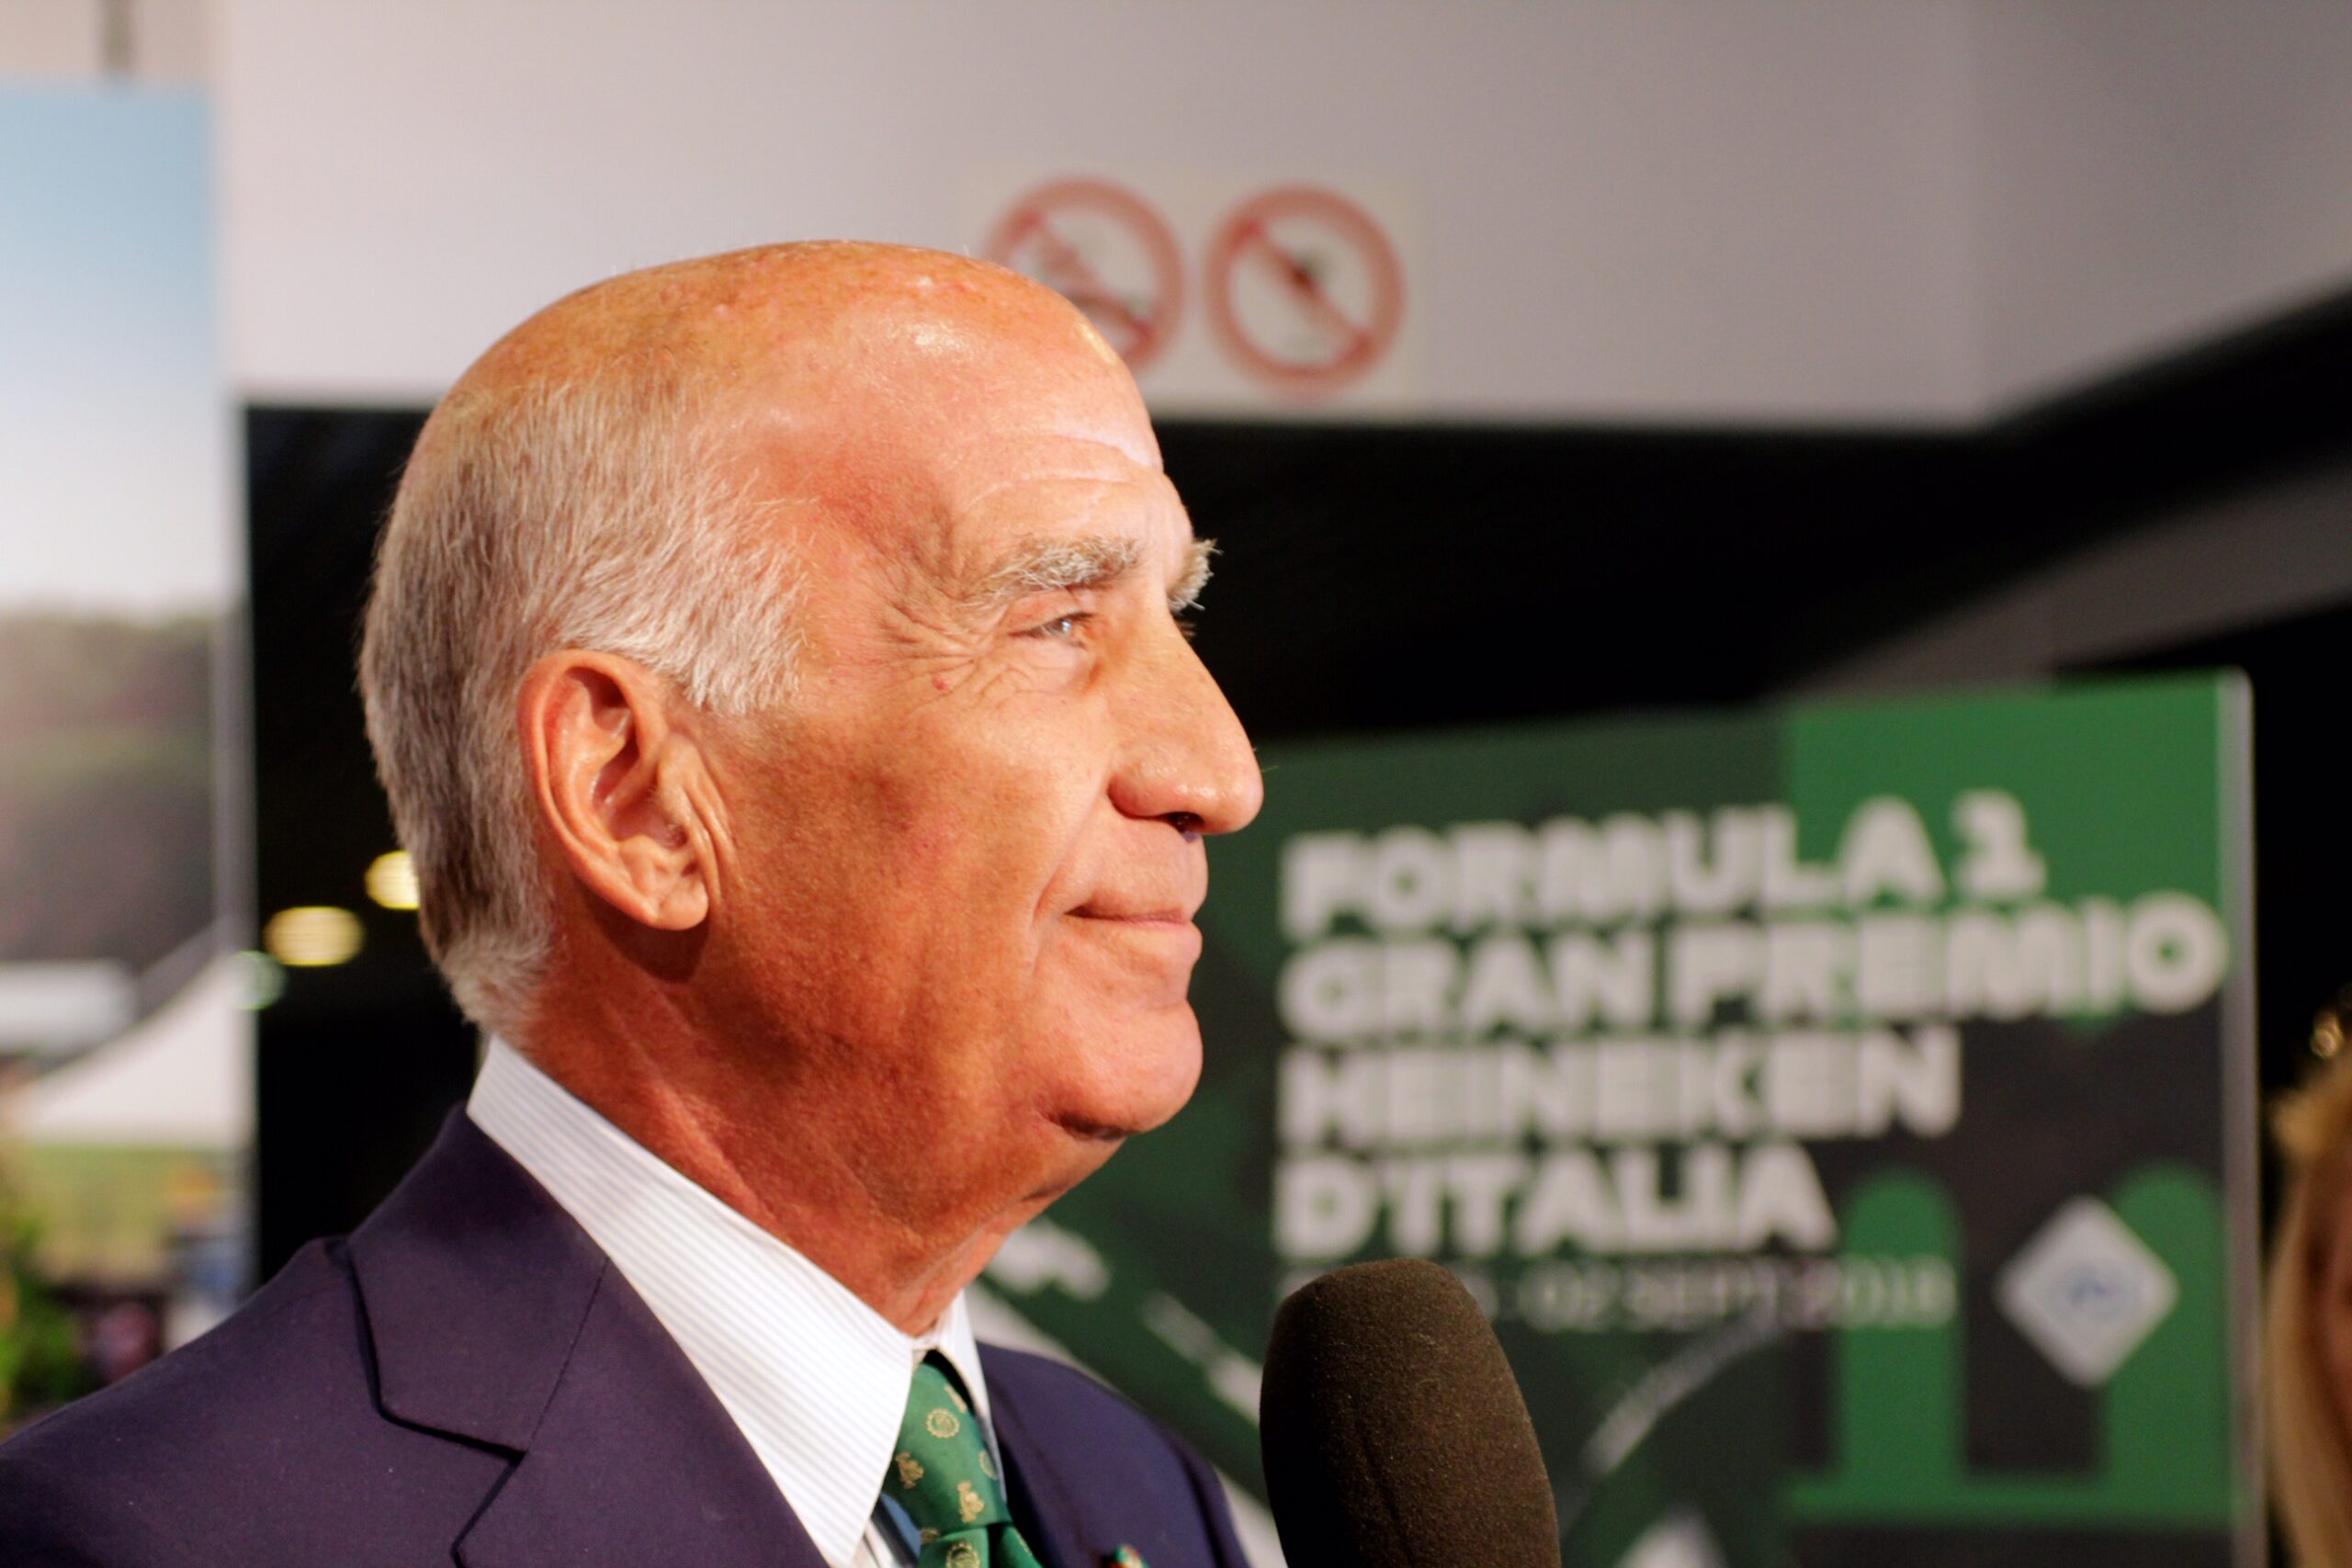 Accordo Aci-Formula 1: Gp Heineken D’Italia si svolgerà il 6 settembre al Monza Eni Circuit